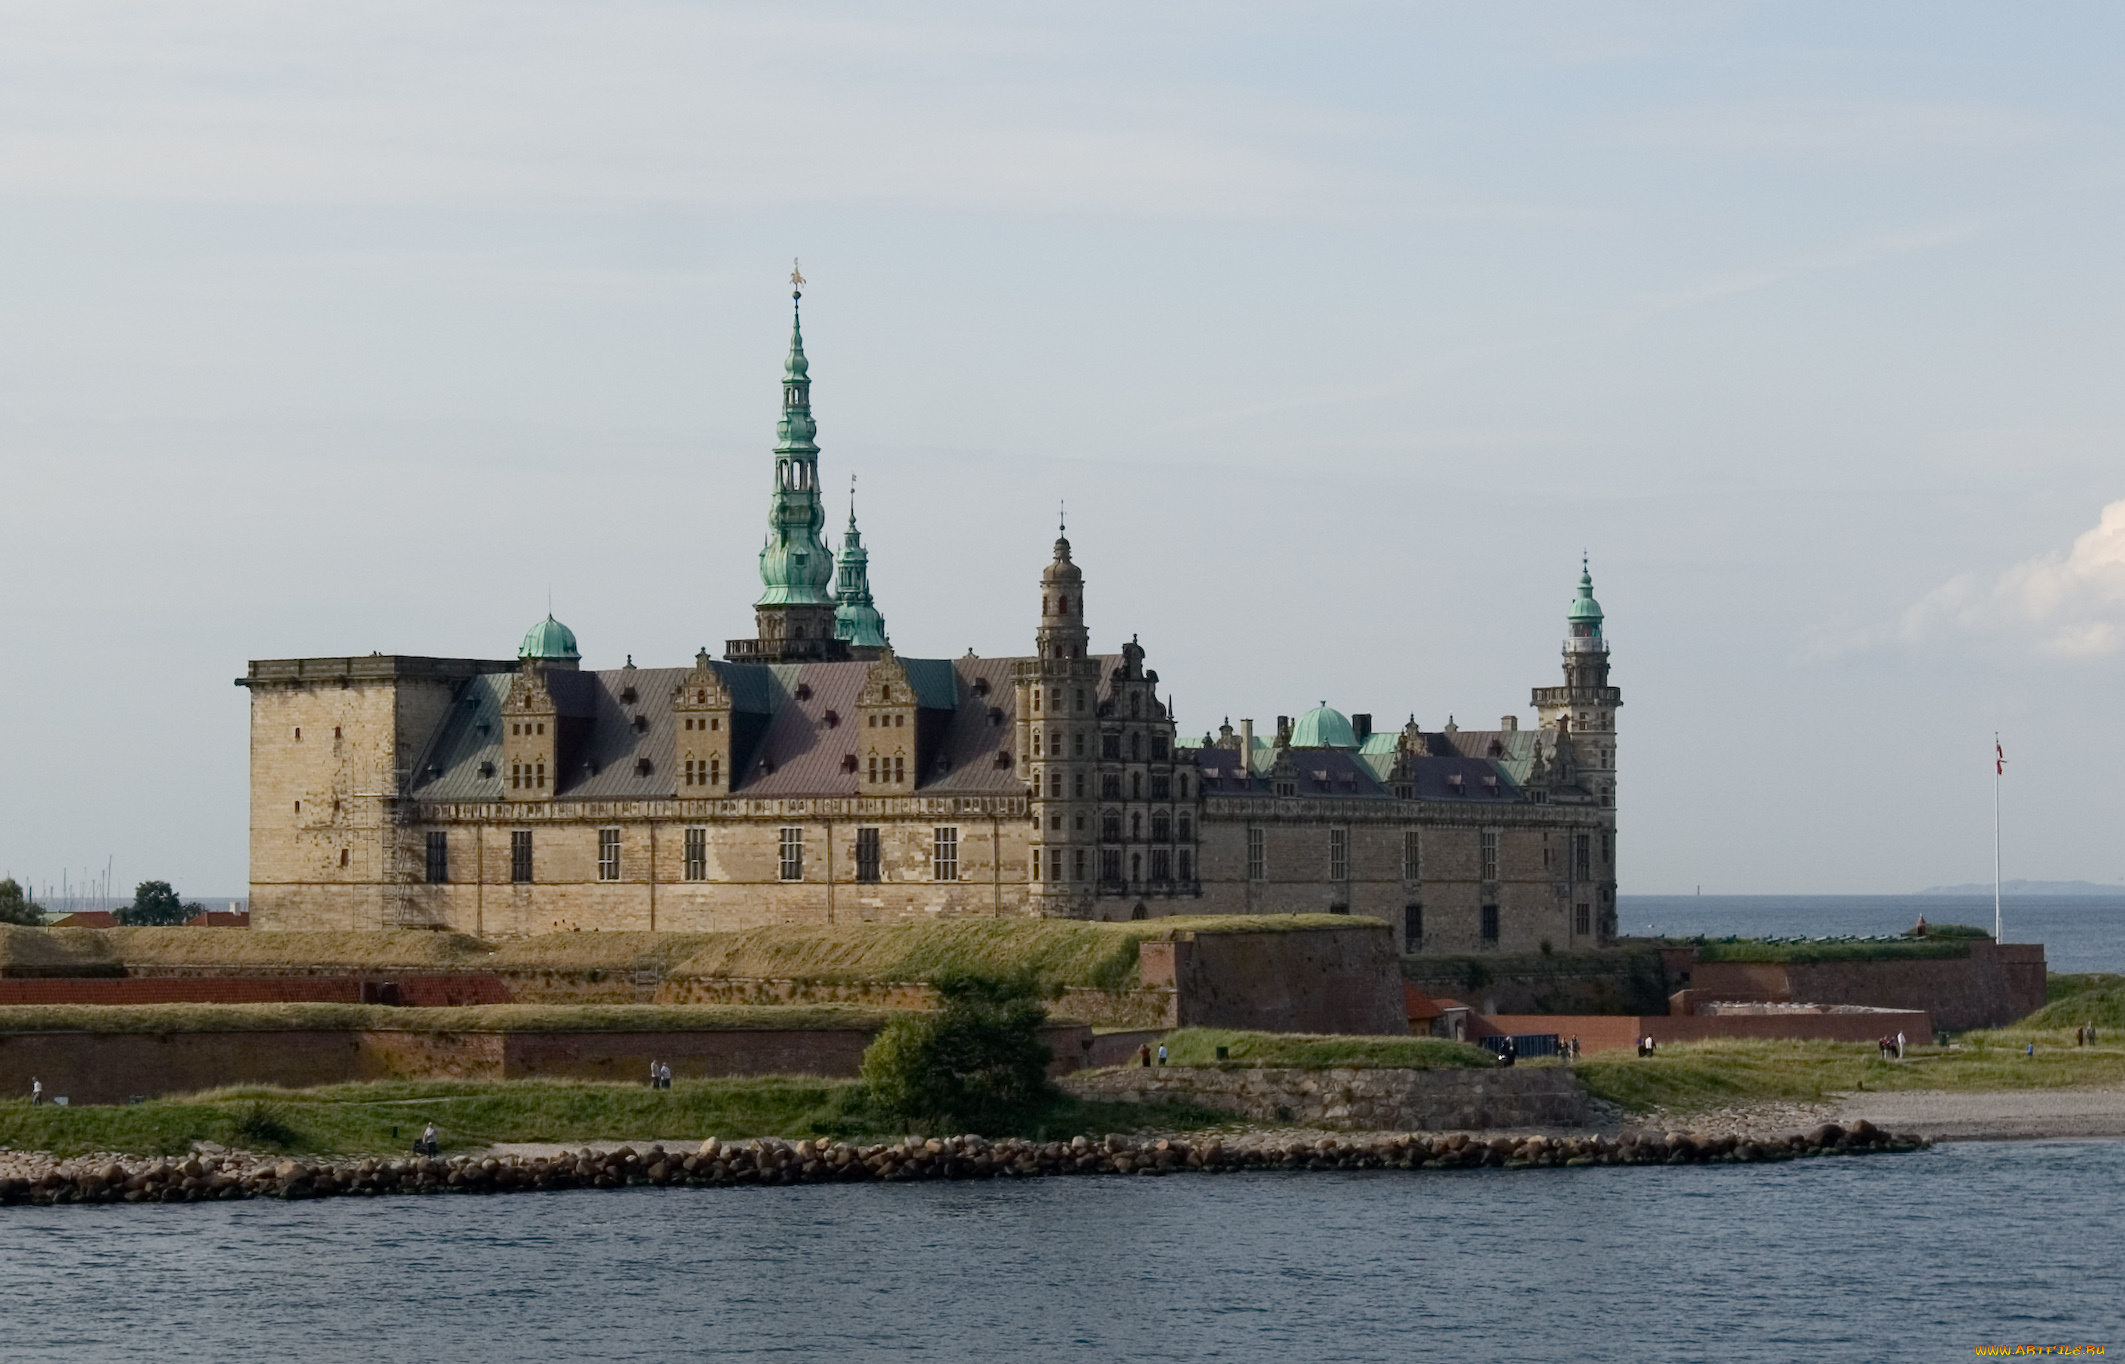 helsingoer, kronborg, города, дворцы, замки, крепости, море, парк, замок